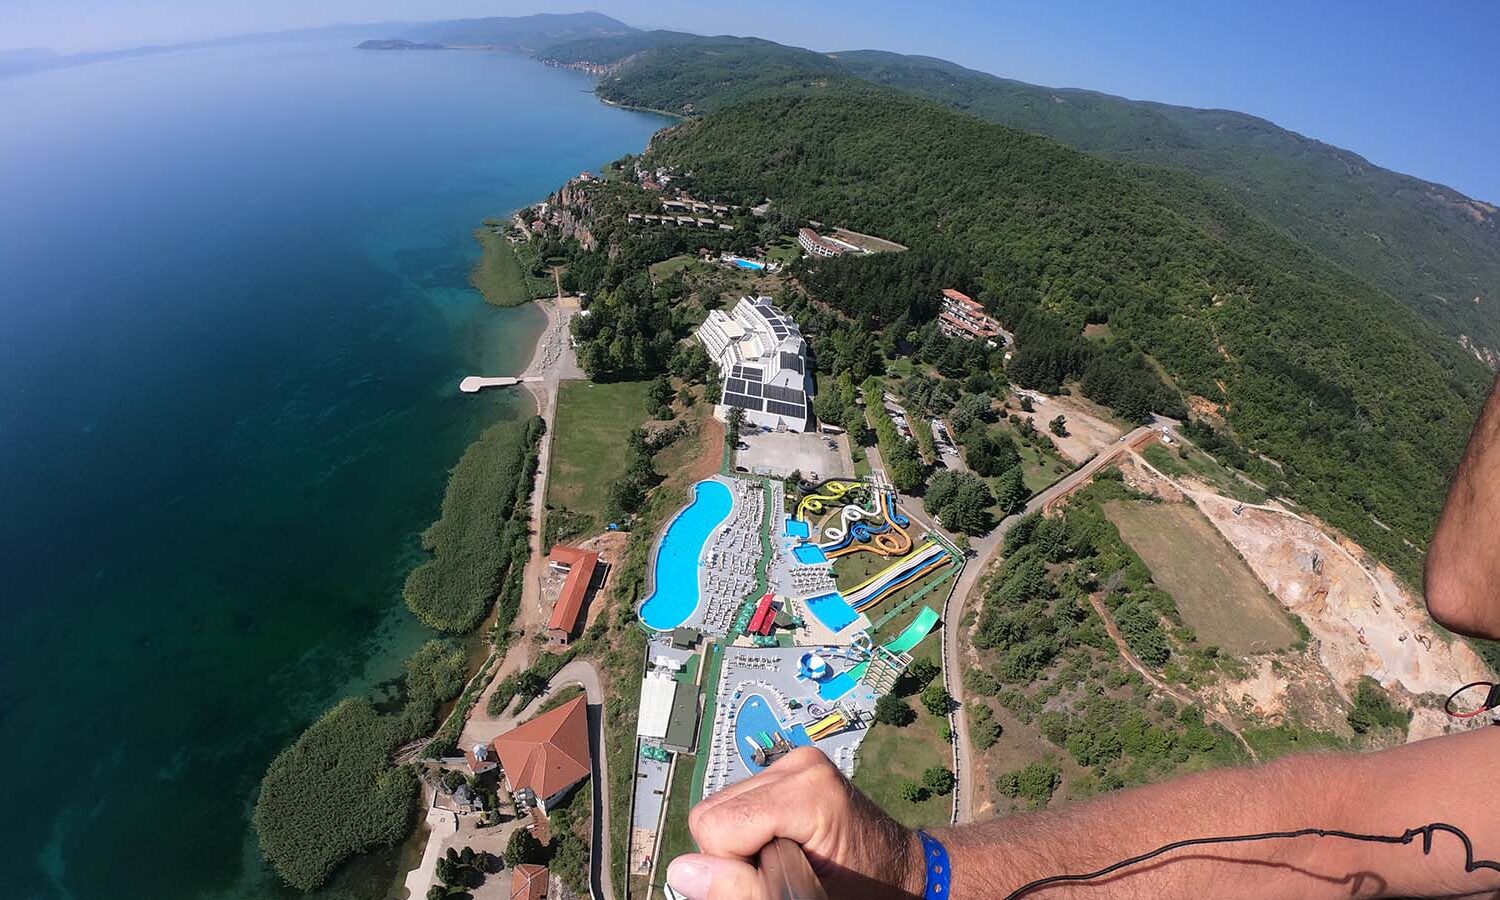 Paragliding from Jablanica above Aqua Park Struga